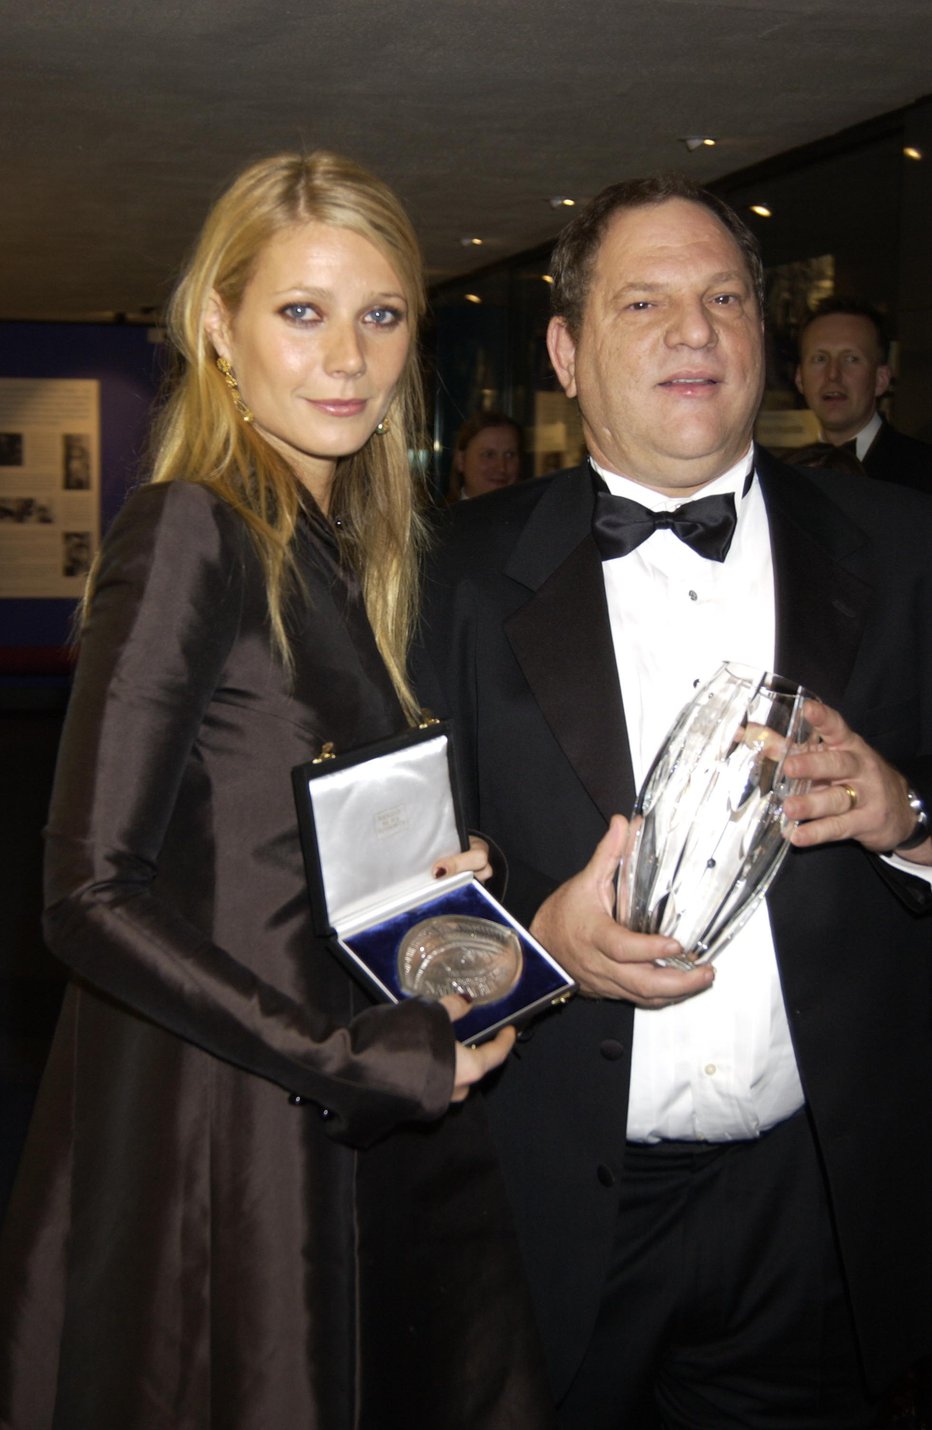 Fotografija: Gwyneth Paltrow in Harvey Weinstein sta bila tesna sodelavca. FOTO: Guliver/getty Images